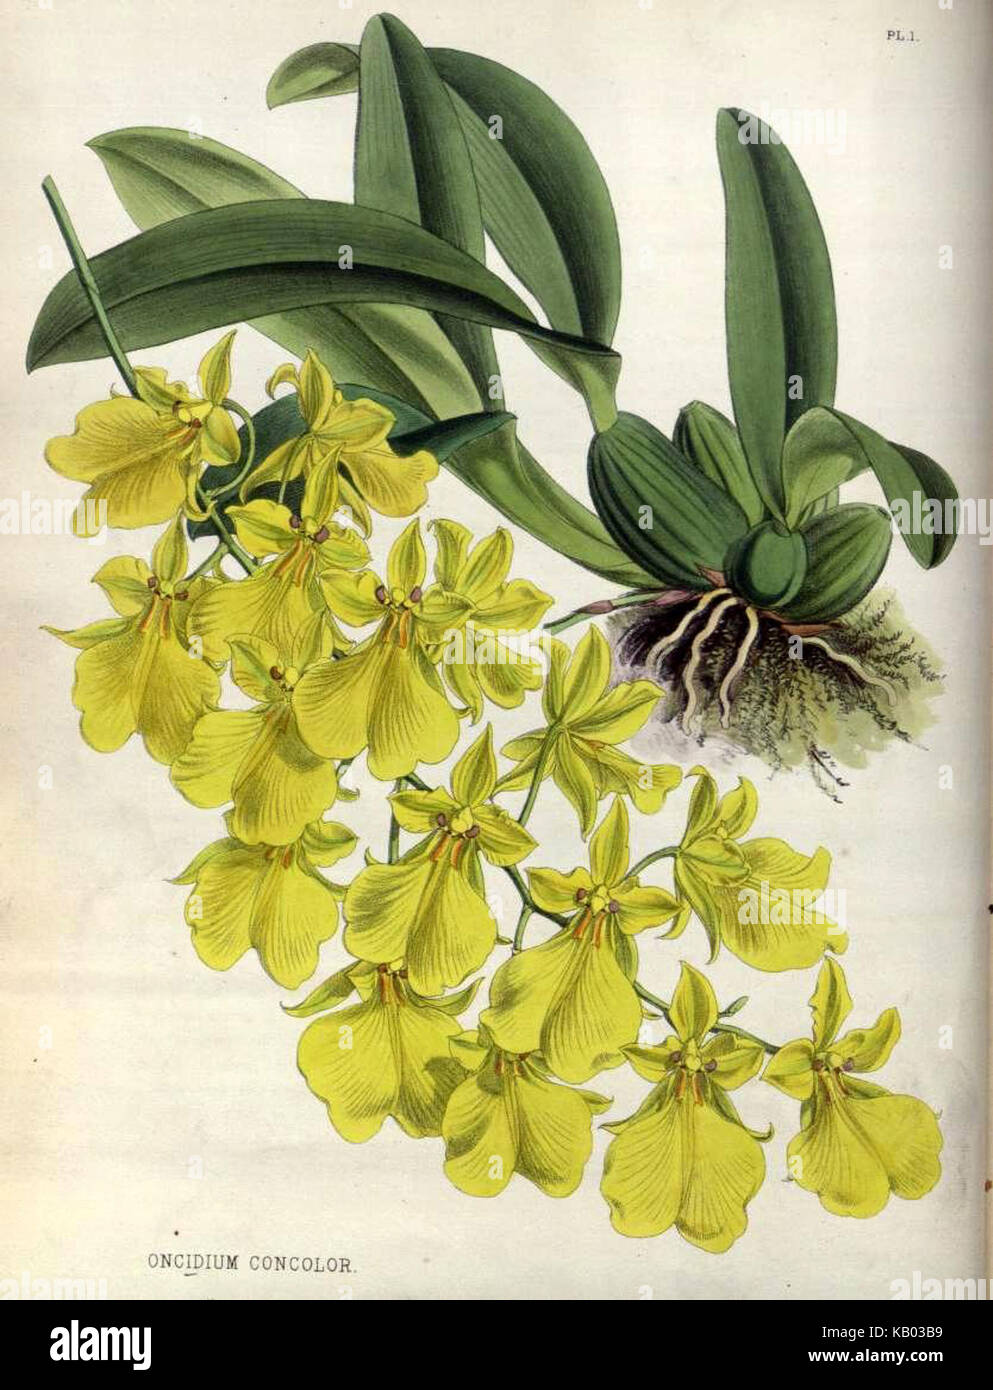 The Orchid Album Plate 001 Oncidium concolor Stock Photo